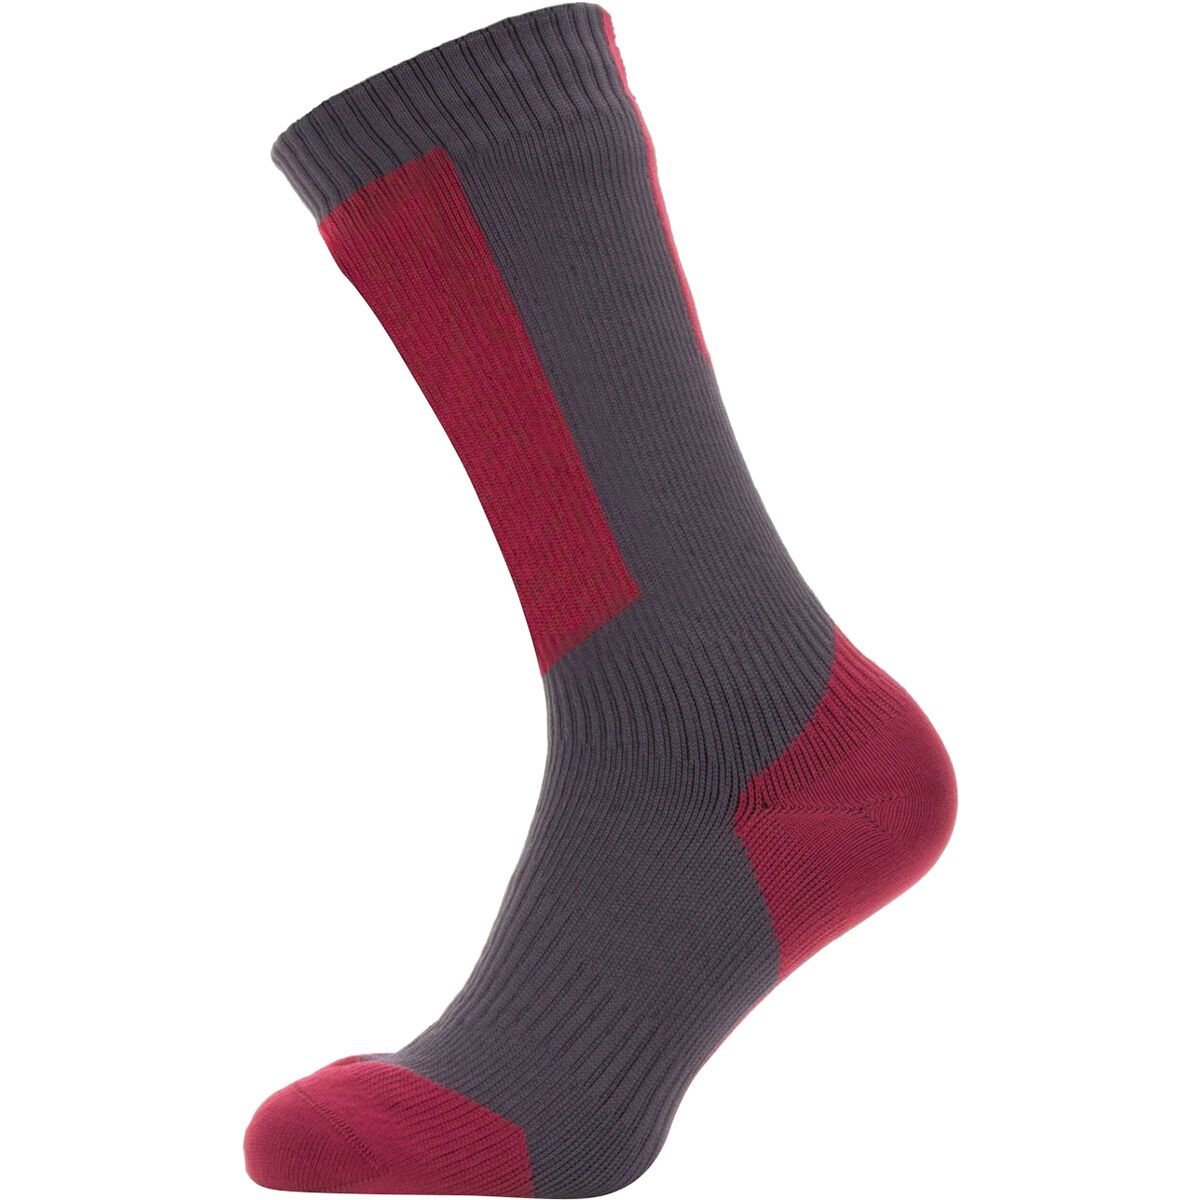 SealSkinz Waterproof Cold Weather Mid-Length Hydrostop Sock - Men's